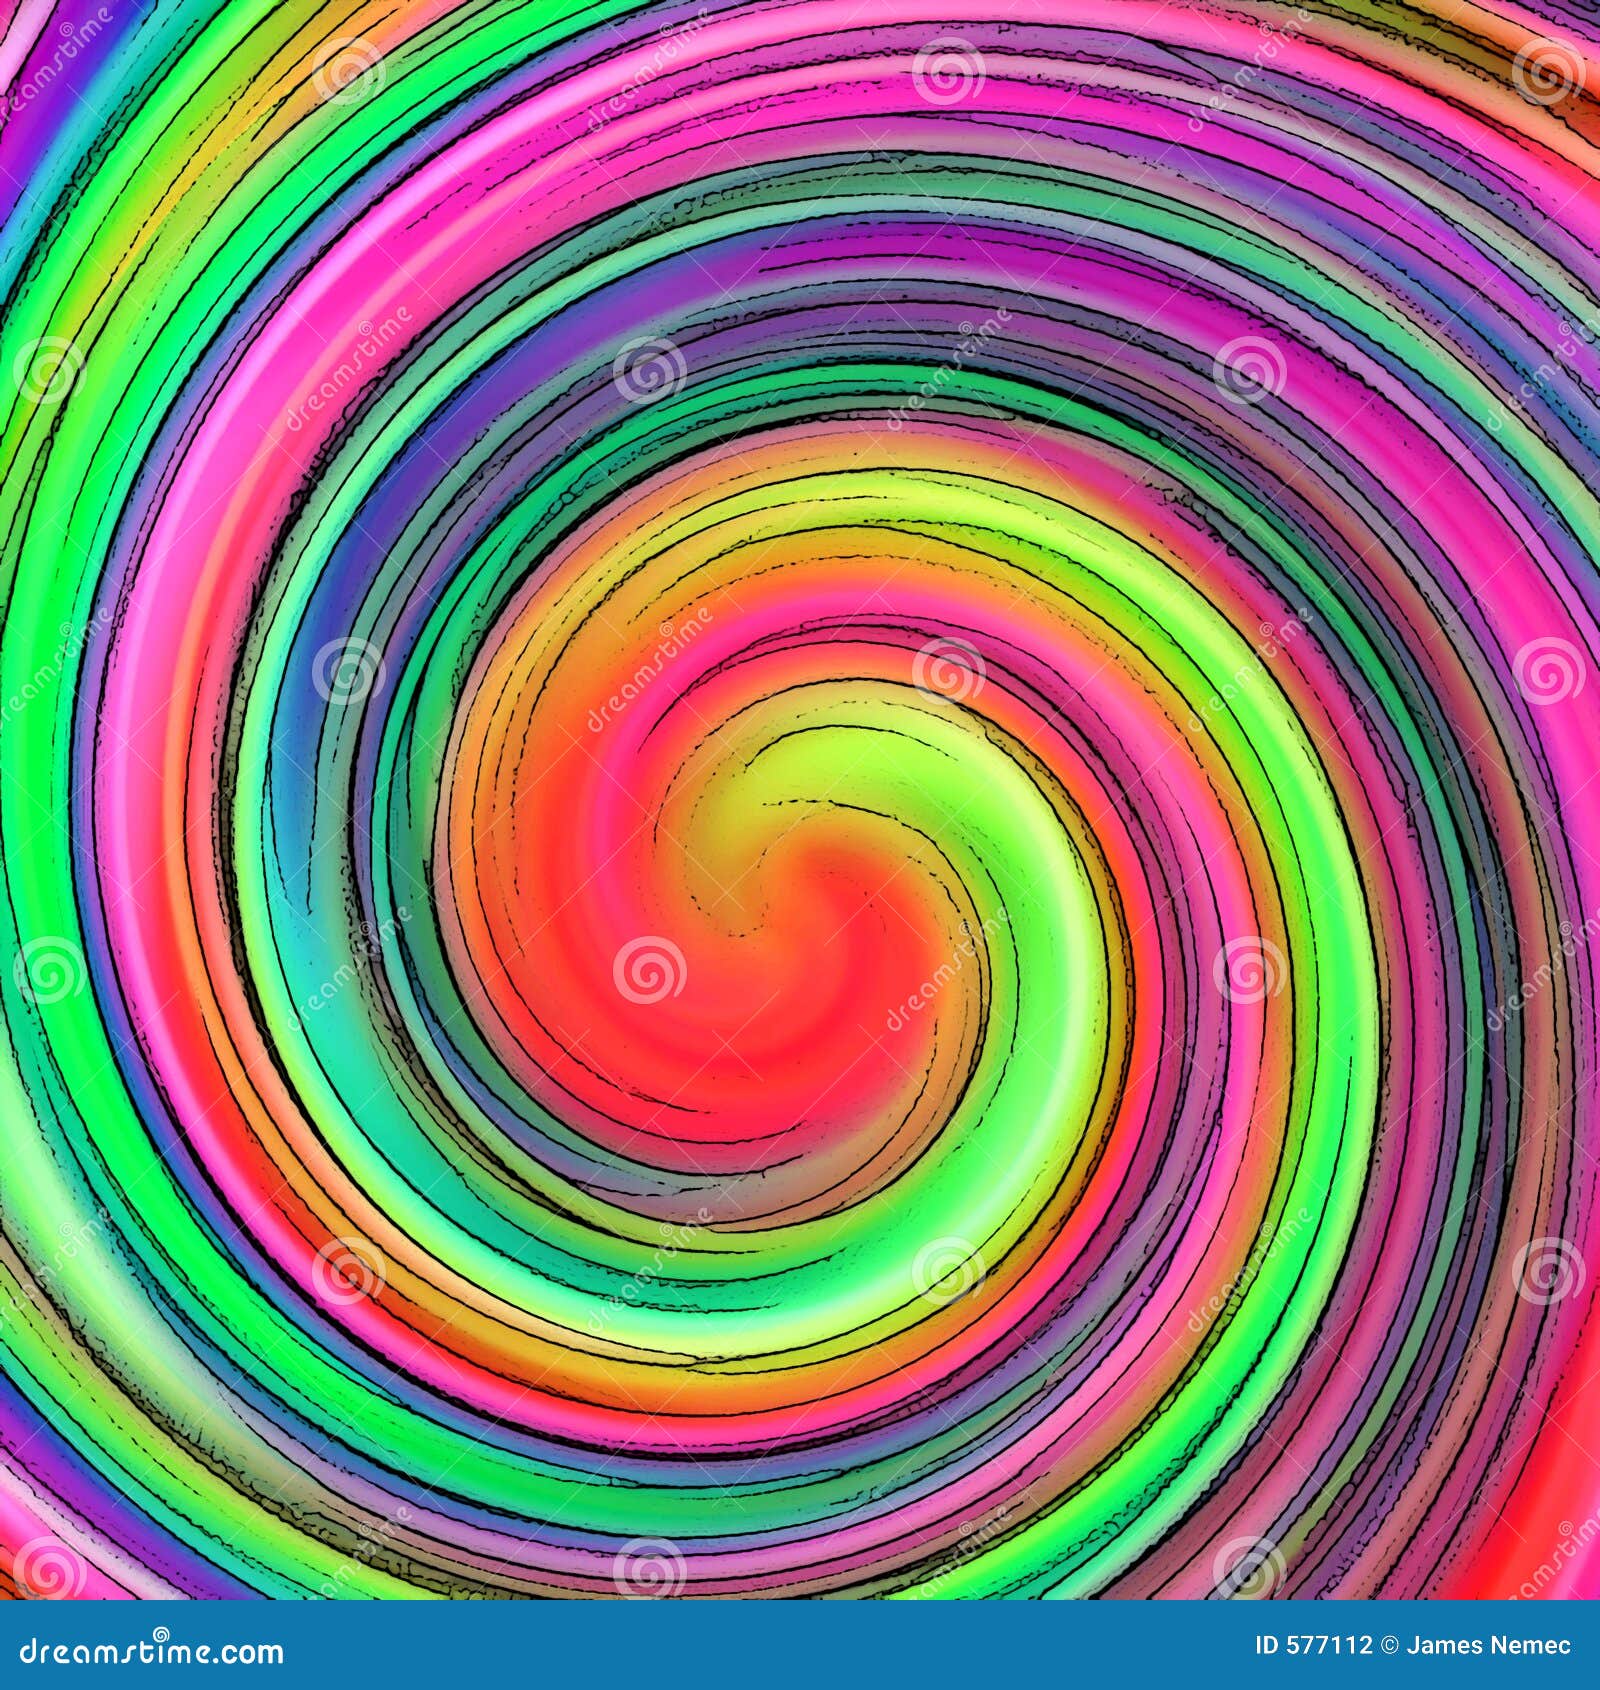 abstract hypnotic swirl